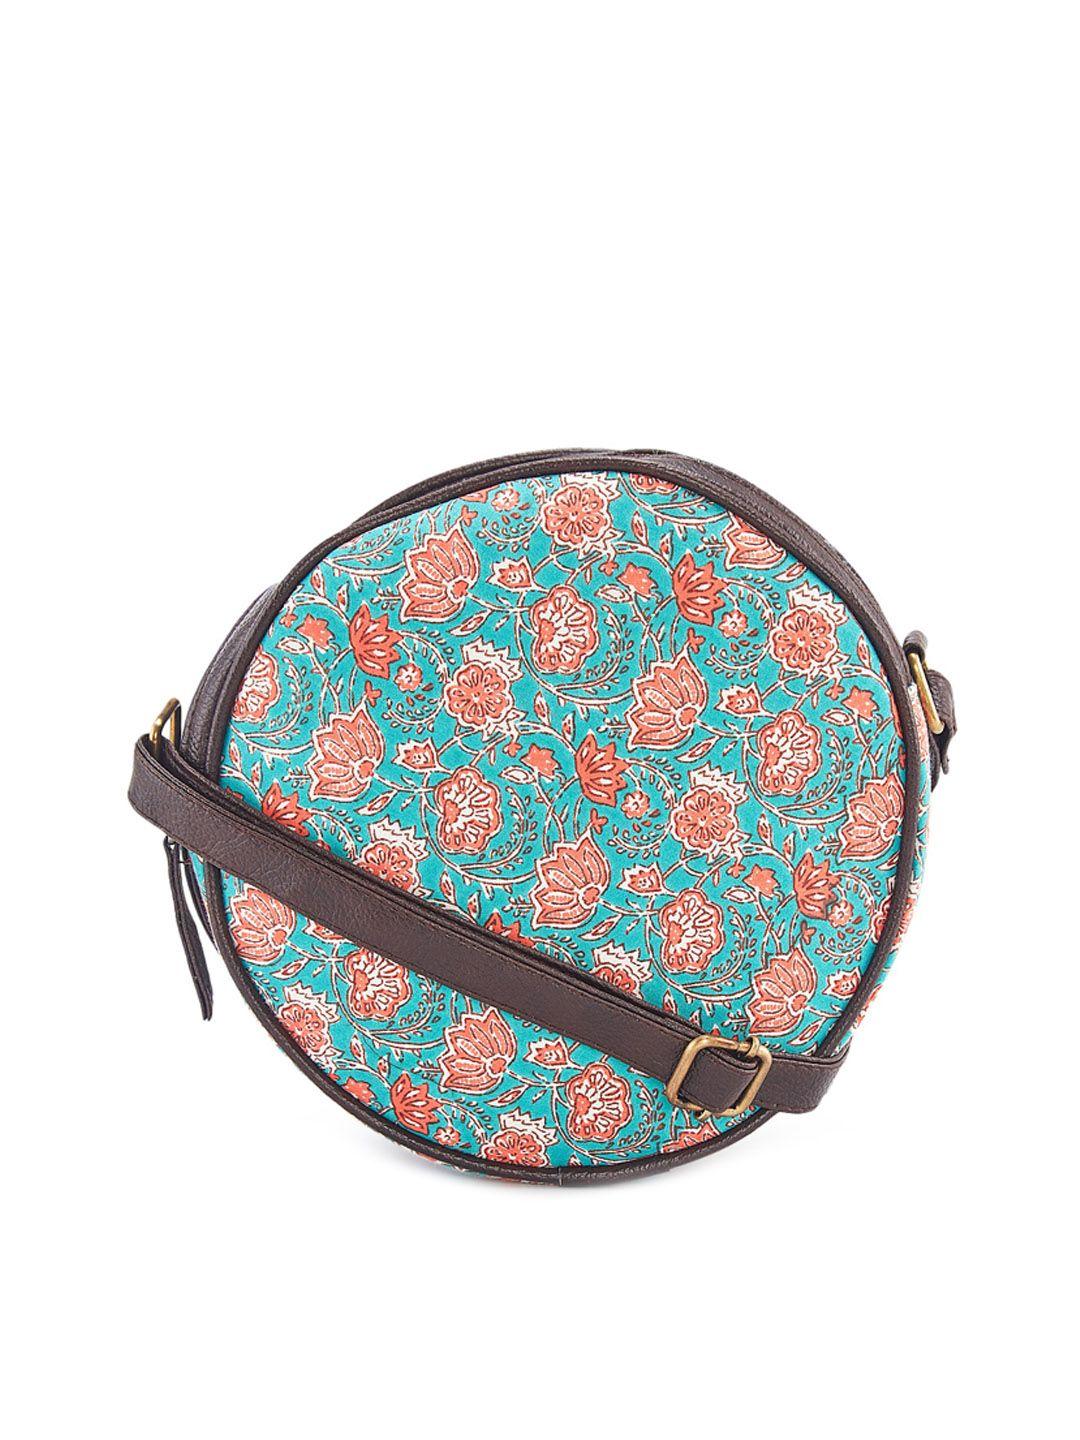 nepri floral printed structured sling bag